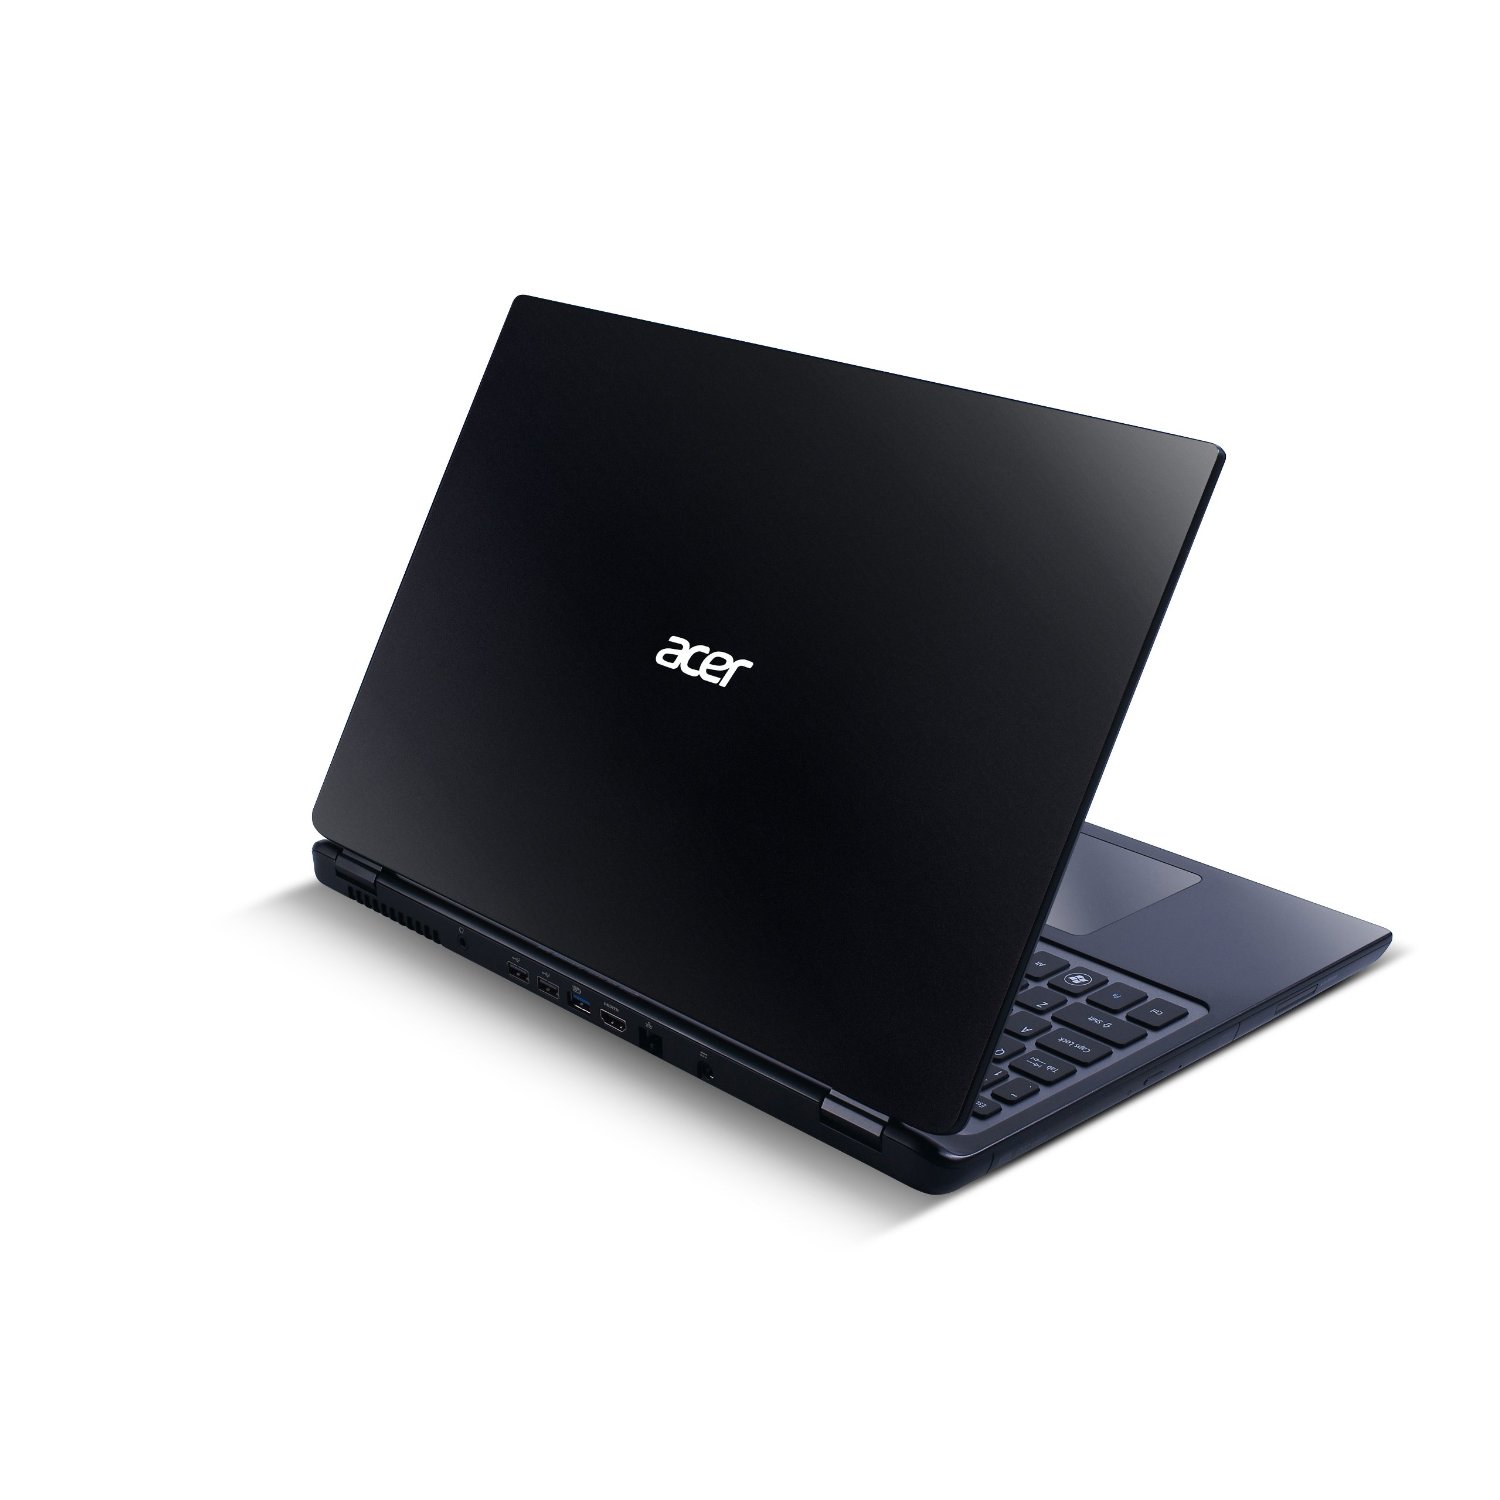 Acer Aspire M3-581PT